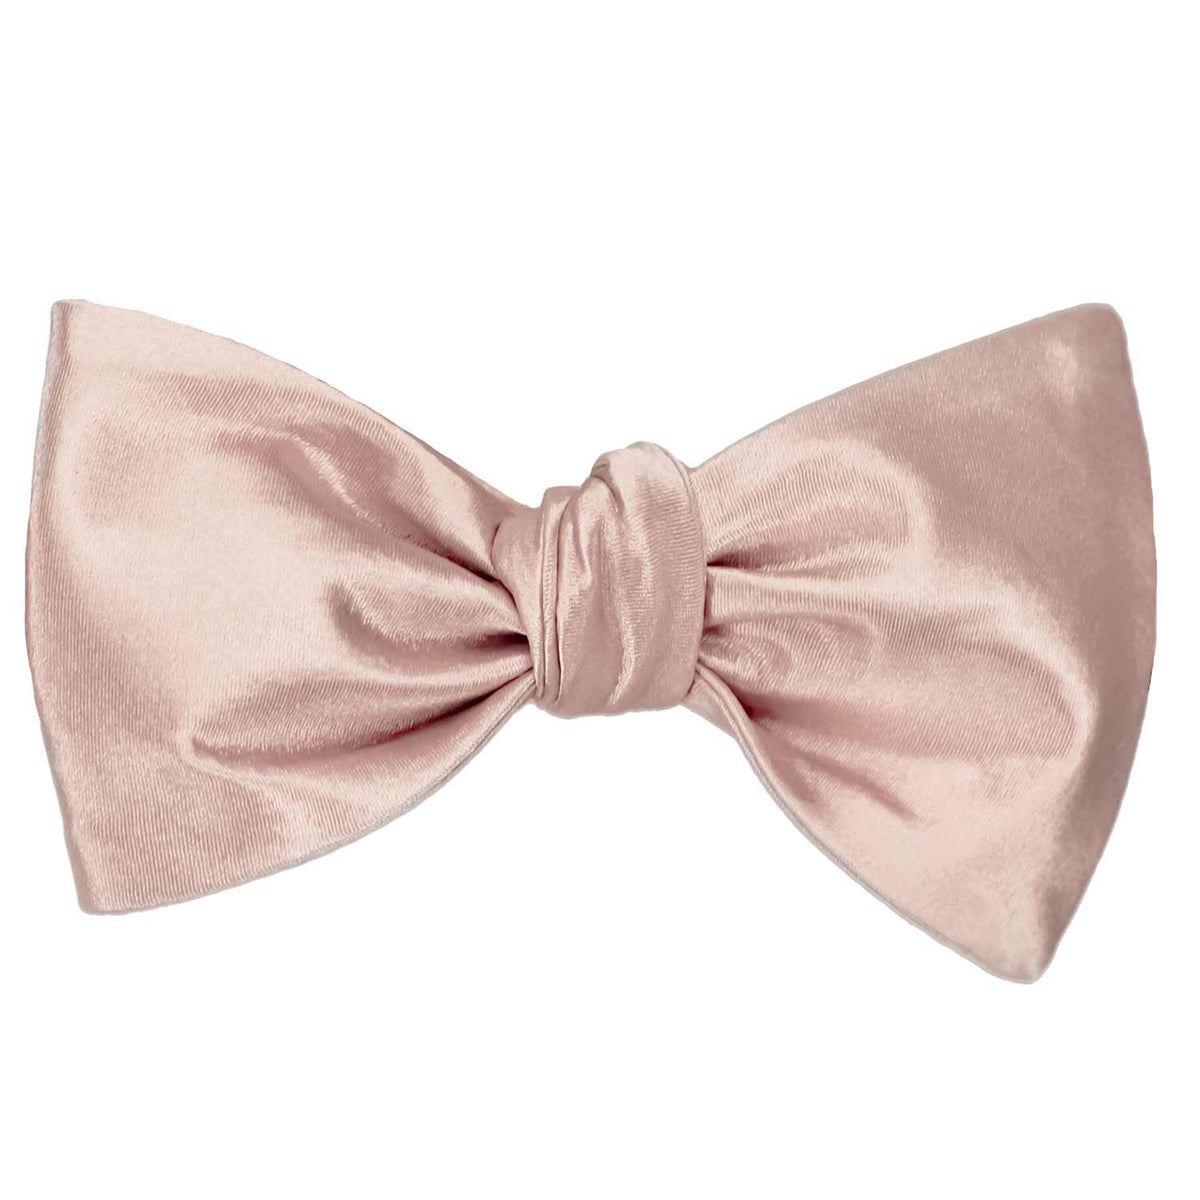 Blush Pink Self-Tie Bow Tie | Shop at TieMart – TieMart, Inc.